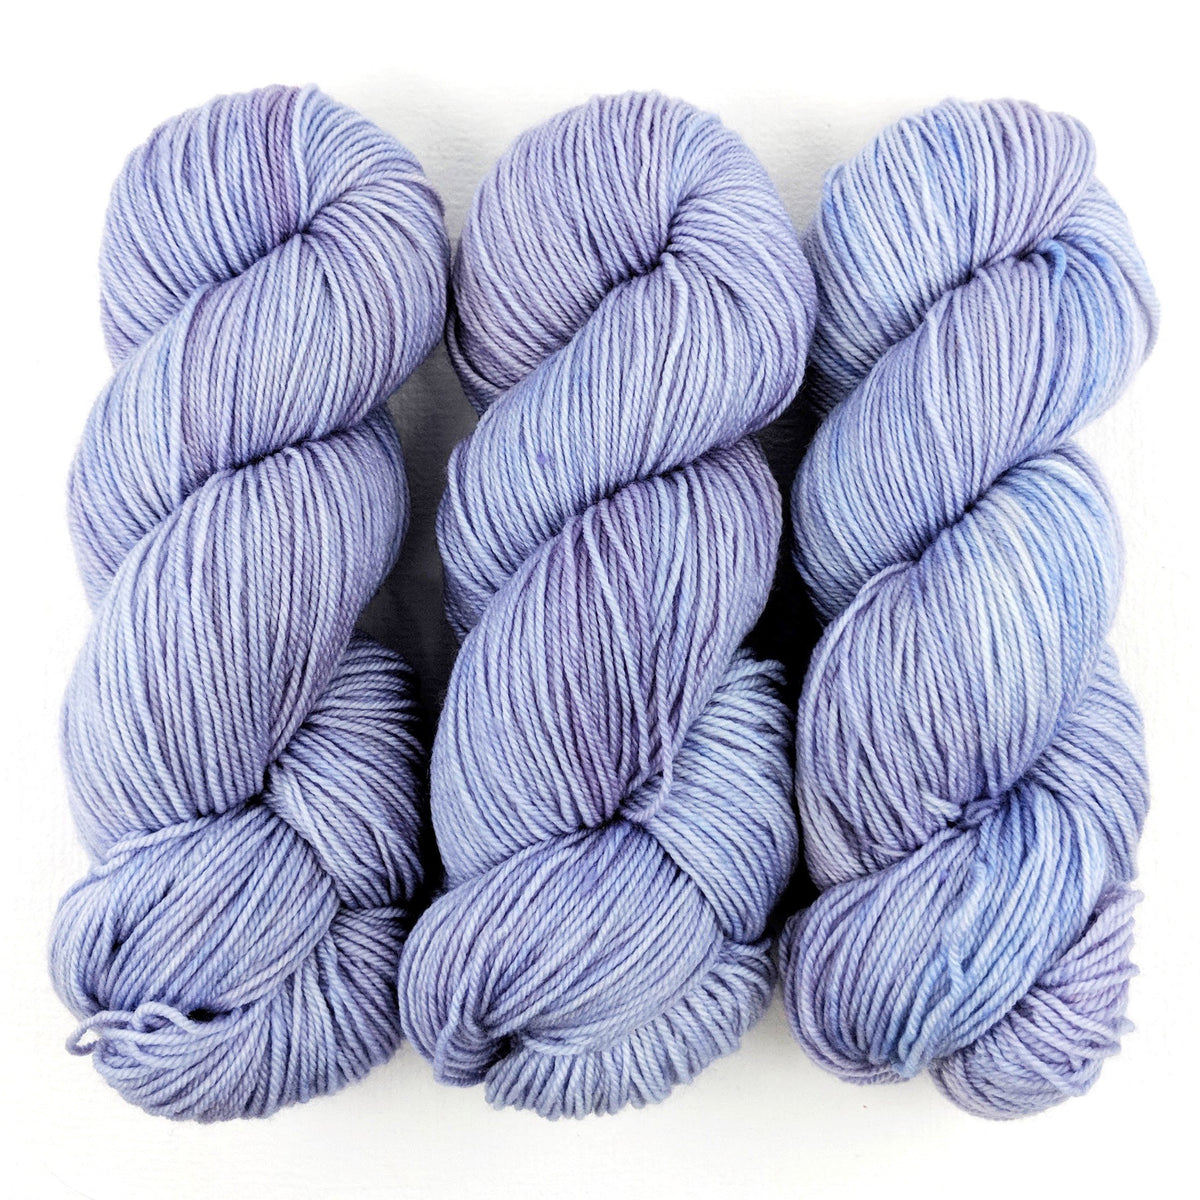 Lavender Cupcake - Nettle Soft DK - Dyed Stock